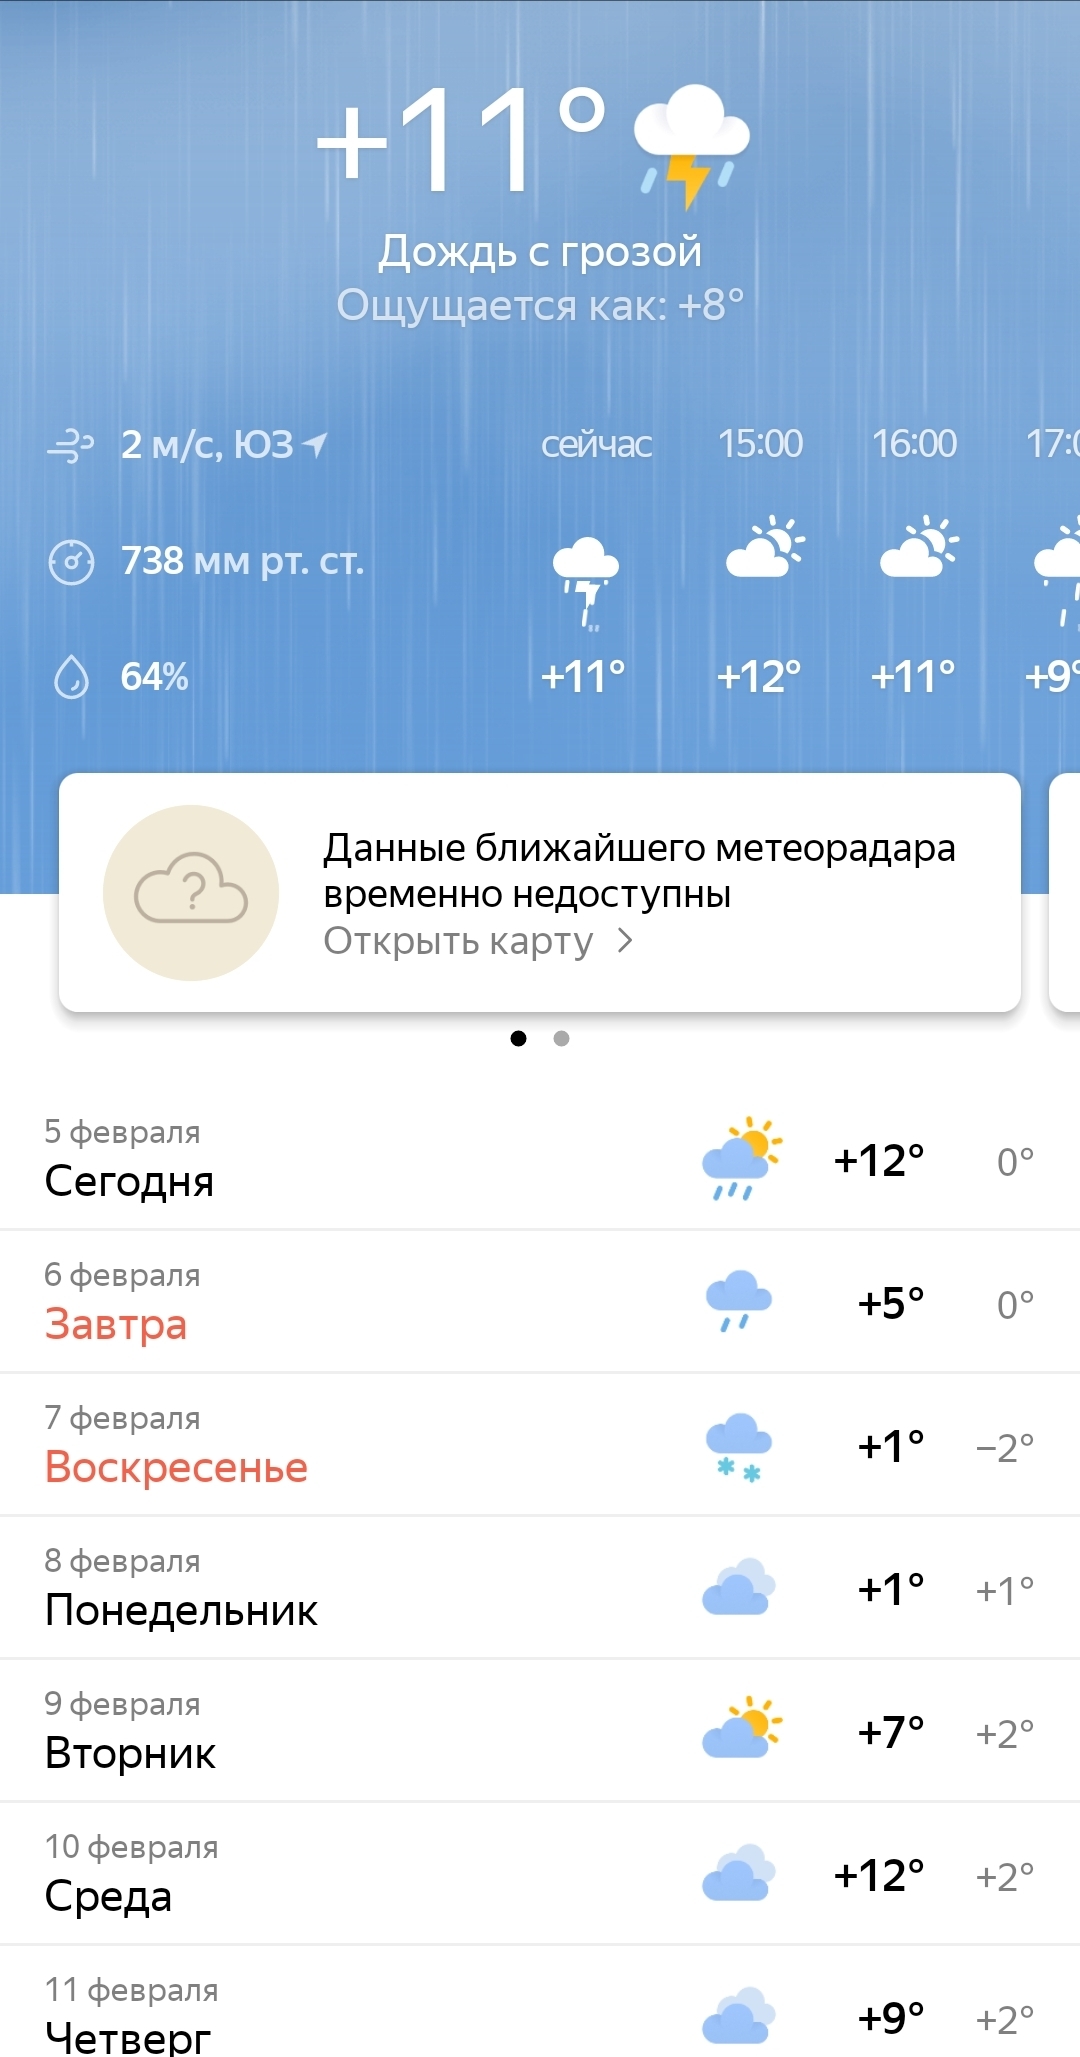 Thunderstorm in February - Thunderstorm, February, Stavropol region, Краснодарский Край, Rostov region, Crimea, Longpost